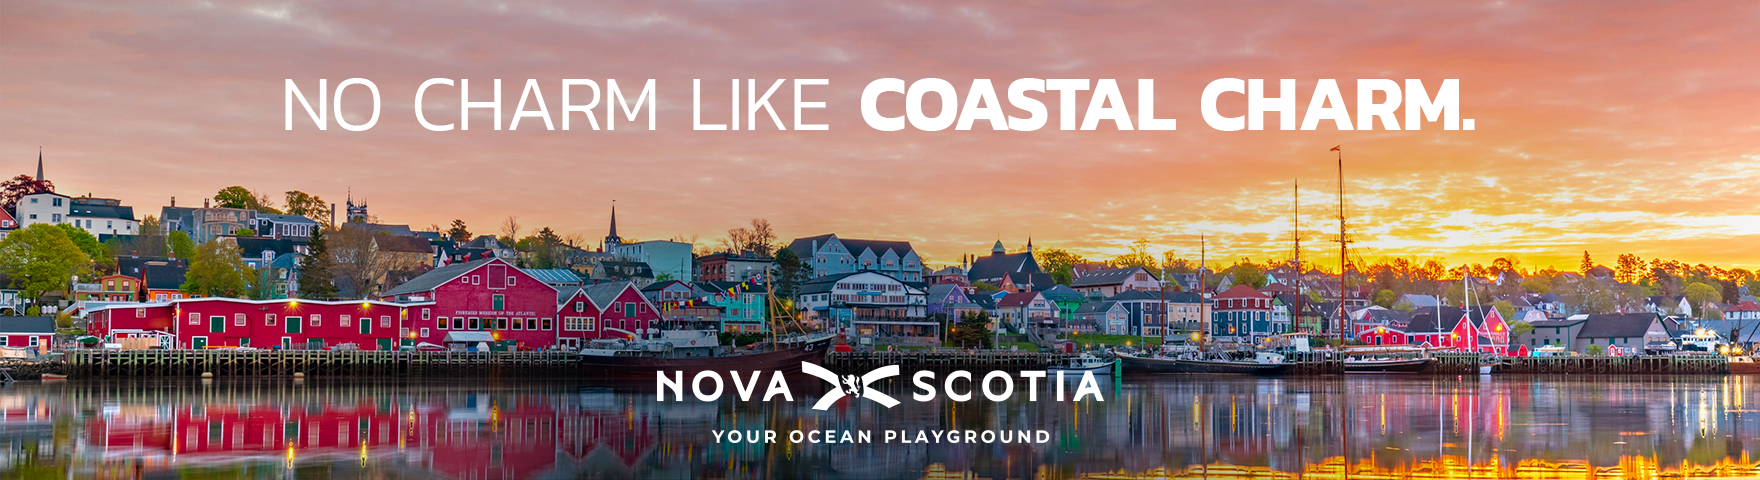 Lunenburg billboard image for advertising Nova Scotia